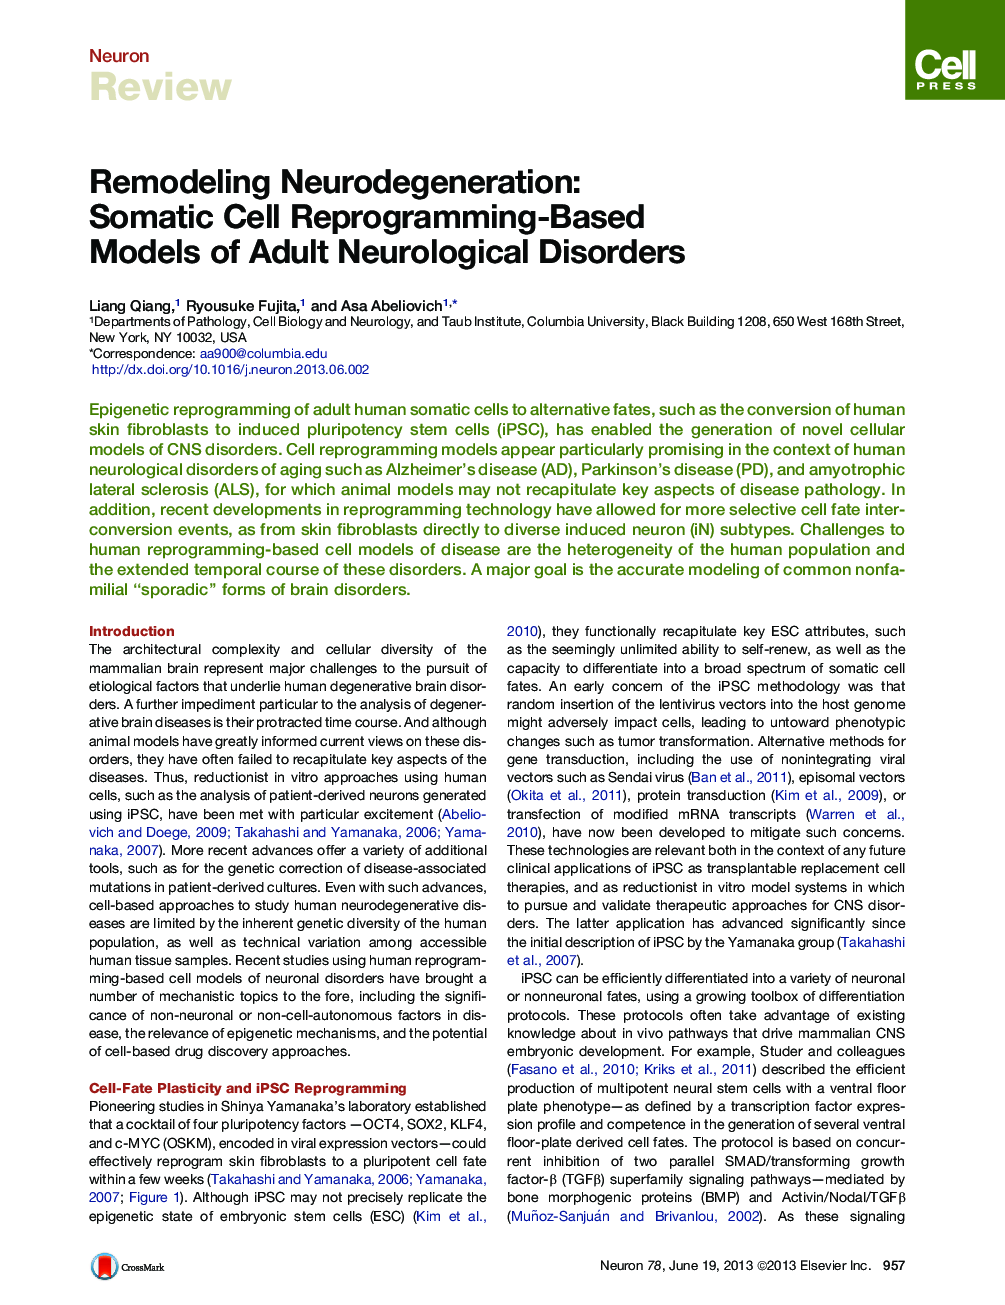 Remodeling Neurodegeneration: Somatic Cell Reprogramming-Based Models of Adult Neurological Disorders